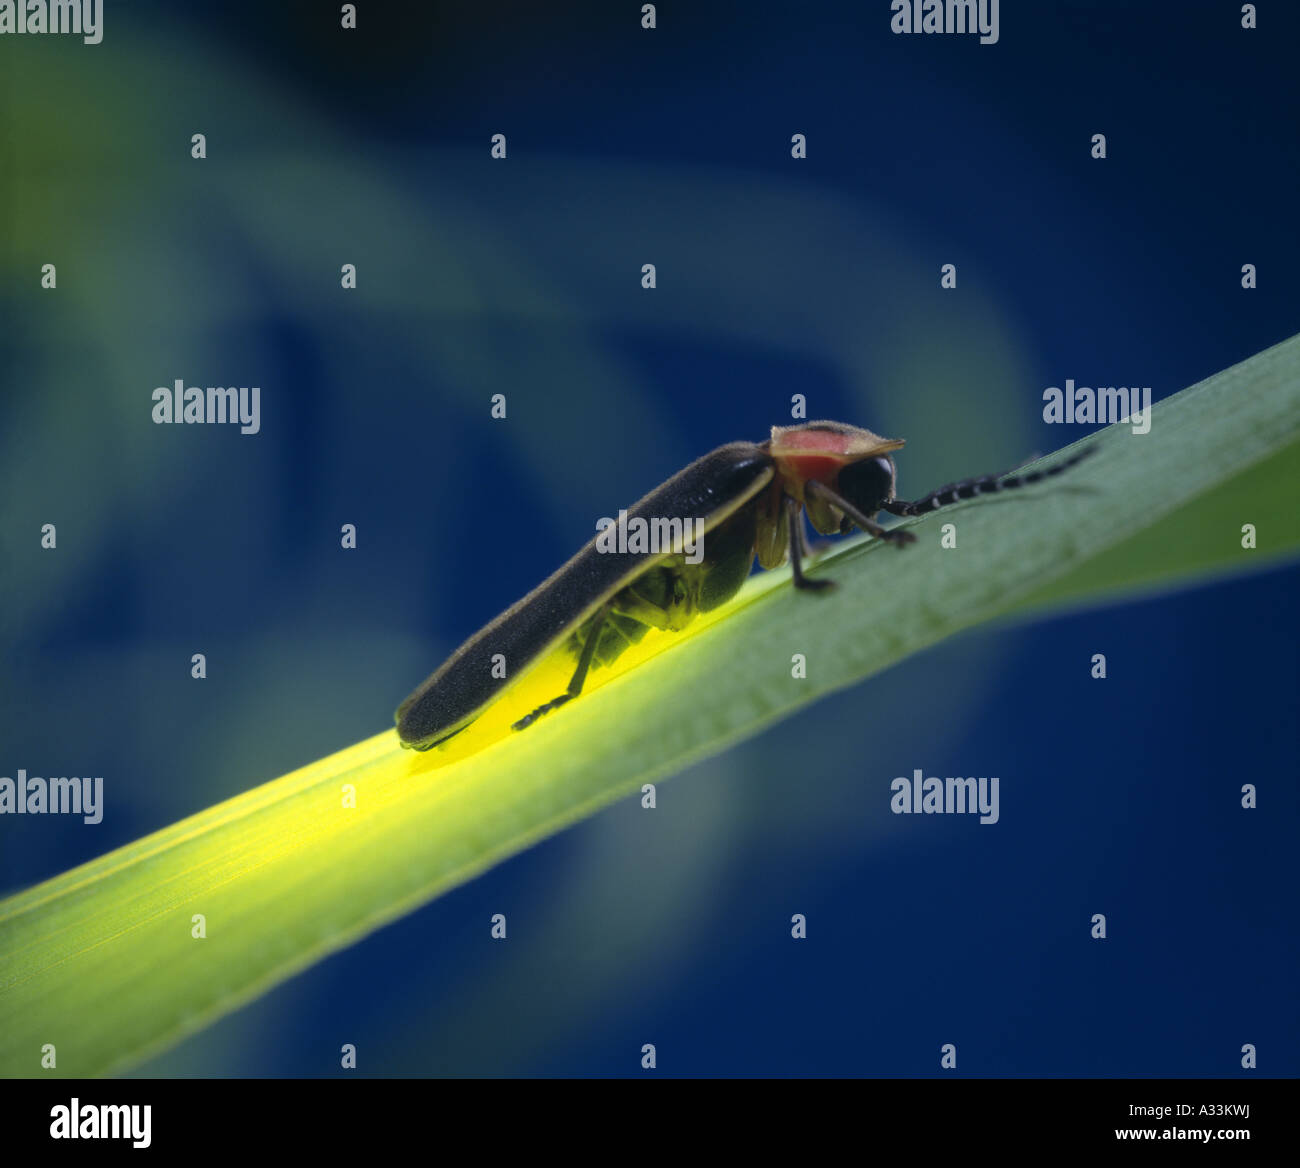 LIGHTNING BUG; FIREFLY; comune orientale (LUCCIOLA PHOTINUS PYRALIS) adulto su erba; la bioluminescenza Foto Stock